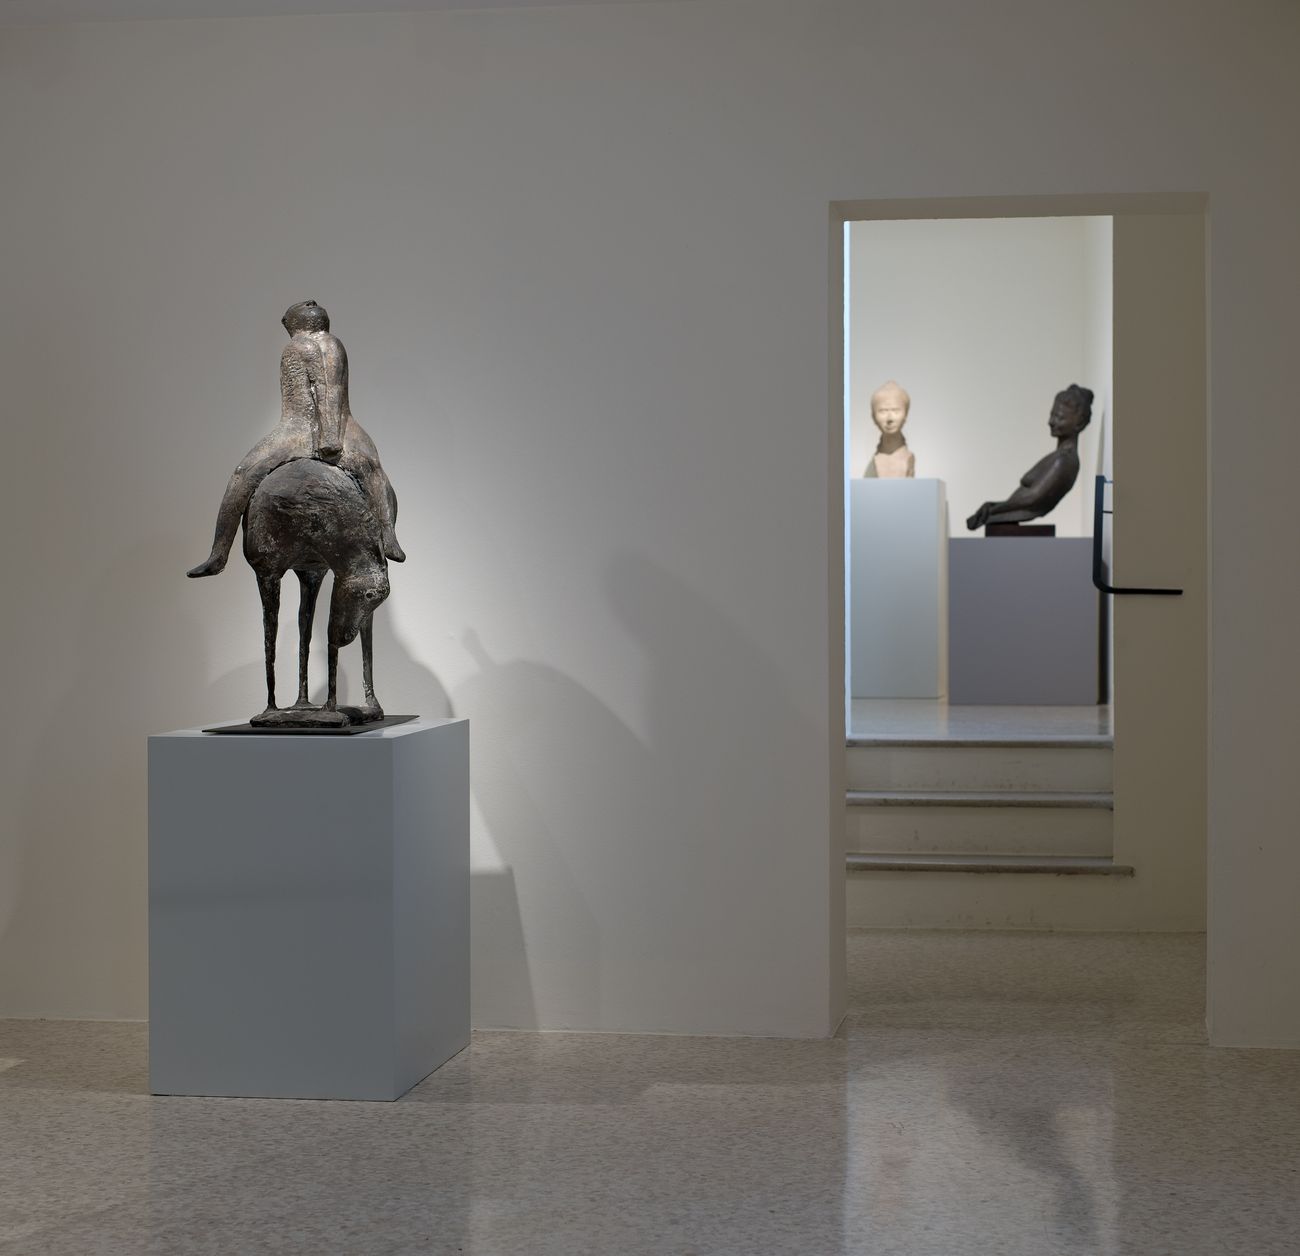 Marino Marini. Passioni visive. Installation view at Peggy Guggenheim Collection, Venezia 2018. Photo Matteo de Fina